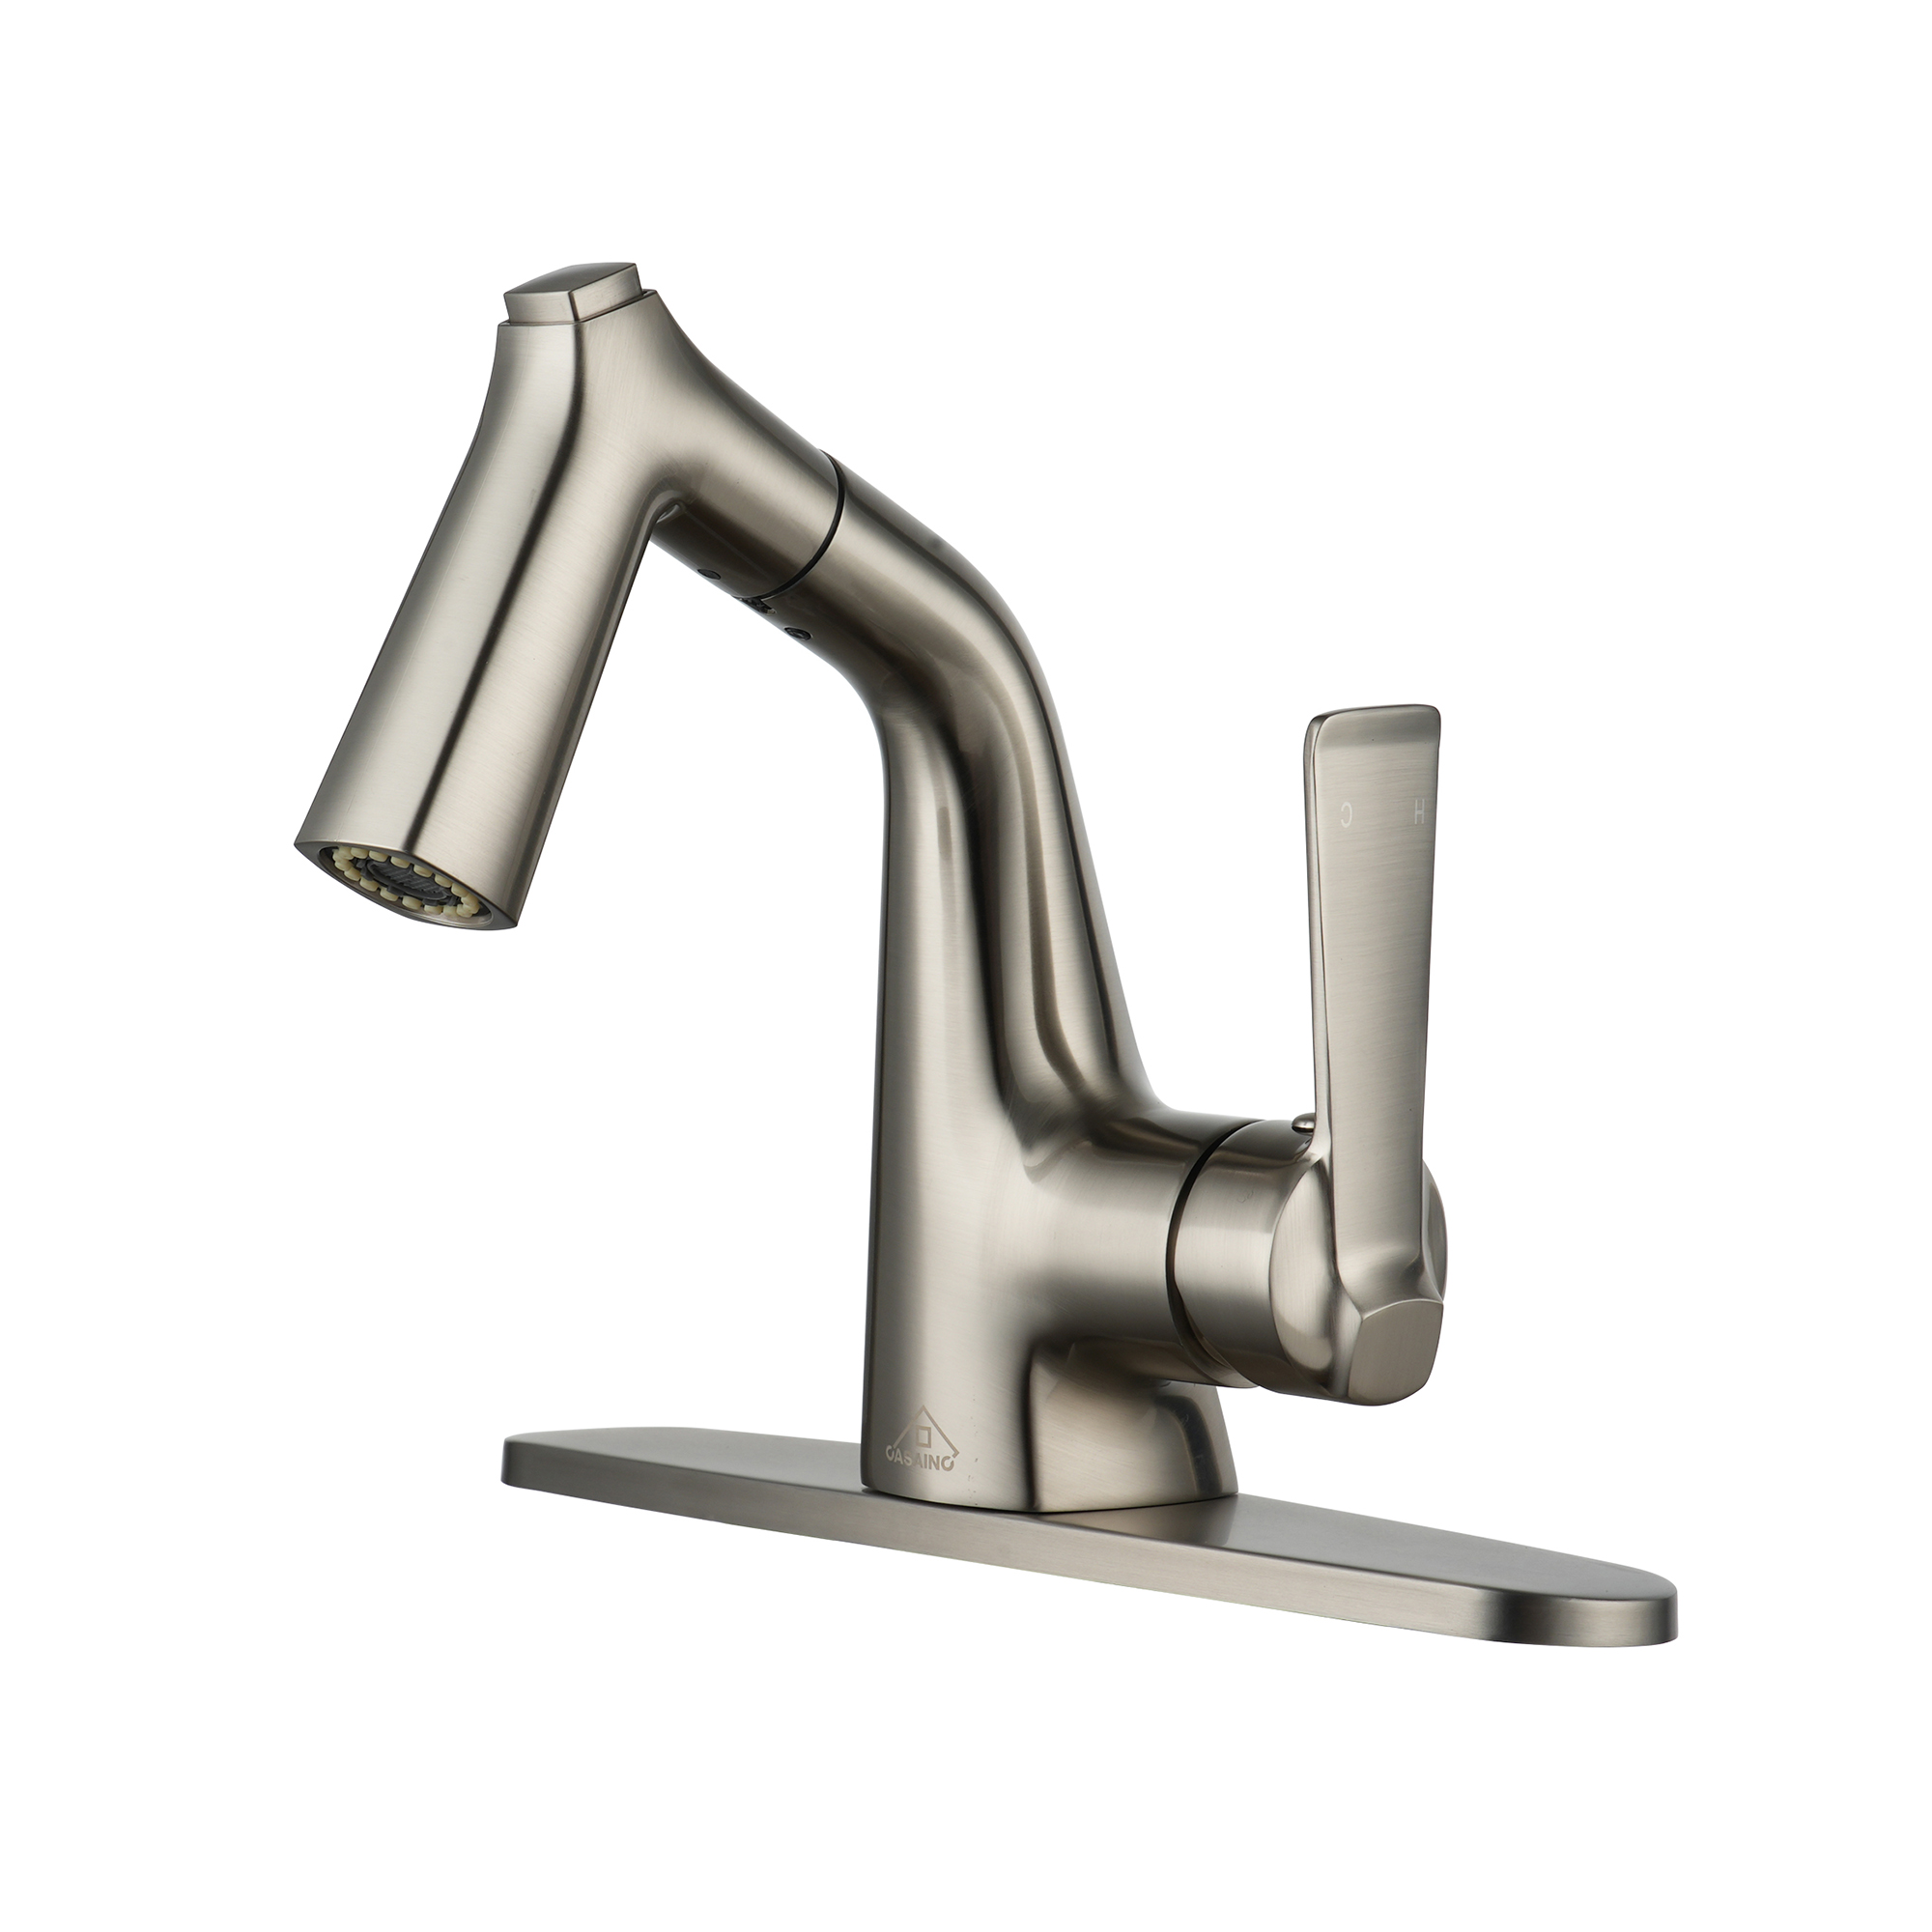 CASAINC Single-Handle Pull-Out Sprayer Basin Faucet